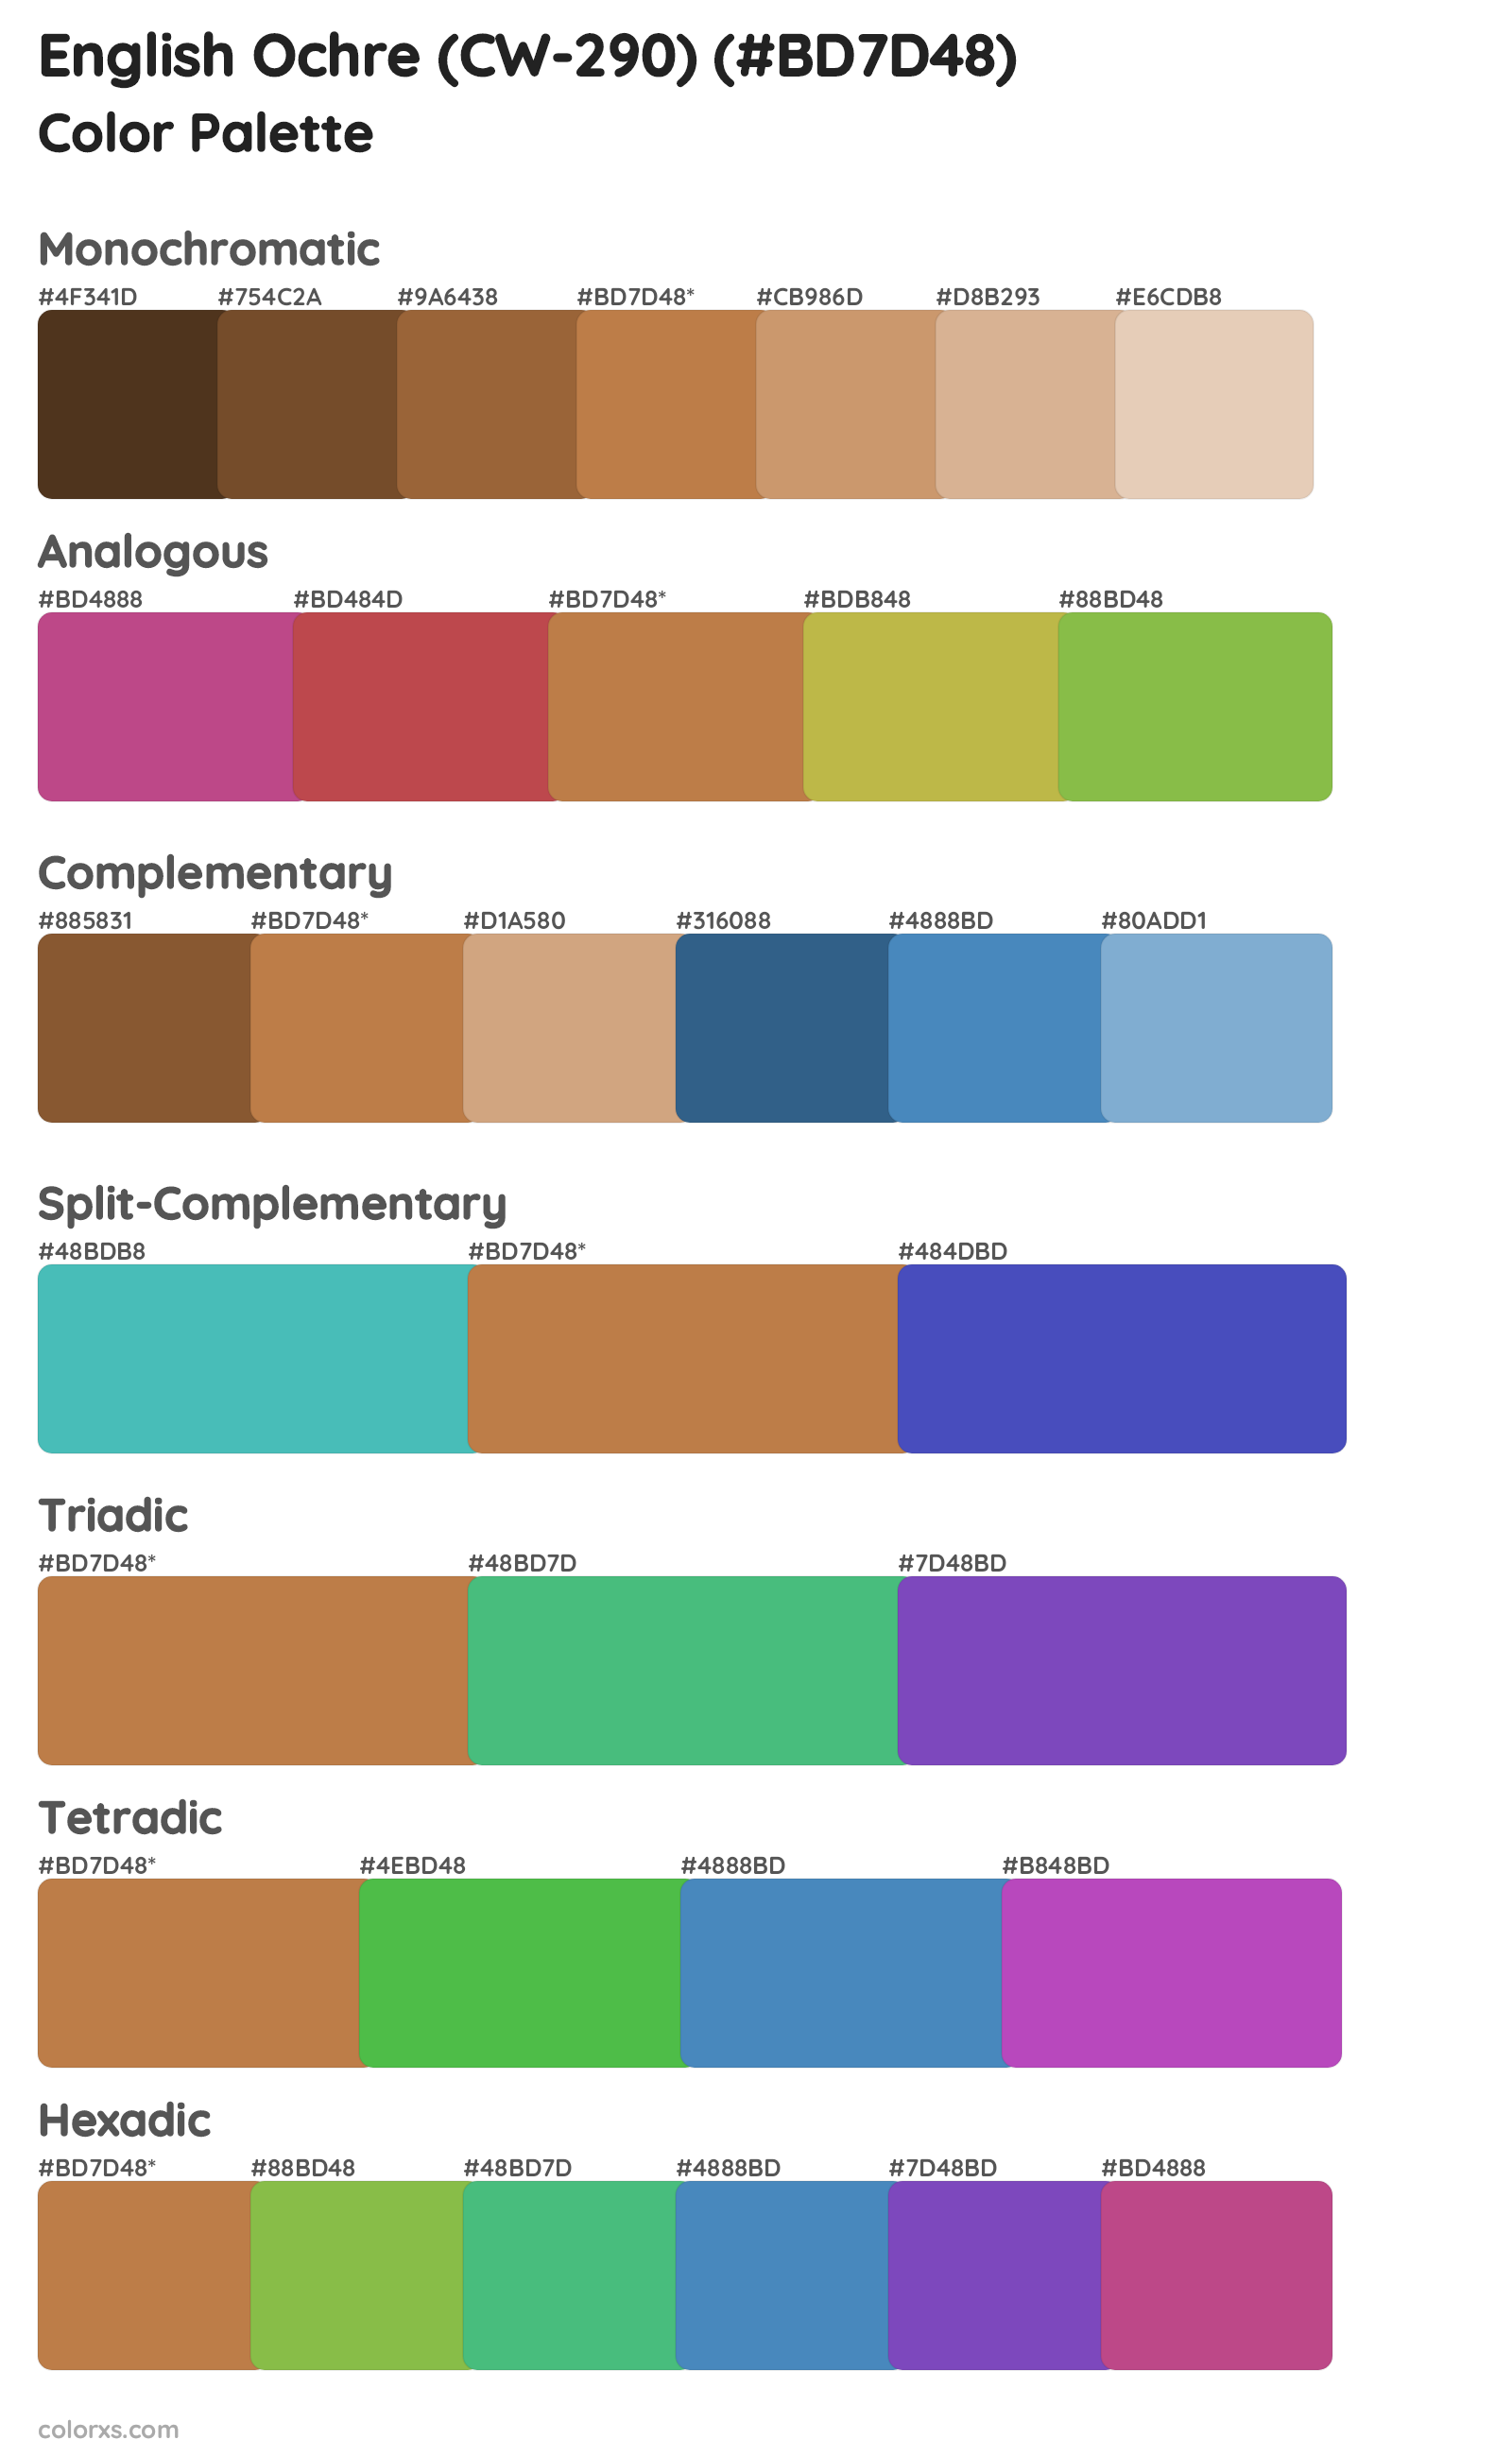 English Ochre (CW-290) Color Scheme Palettes